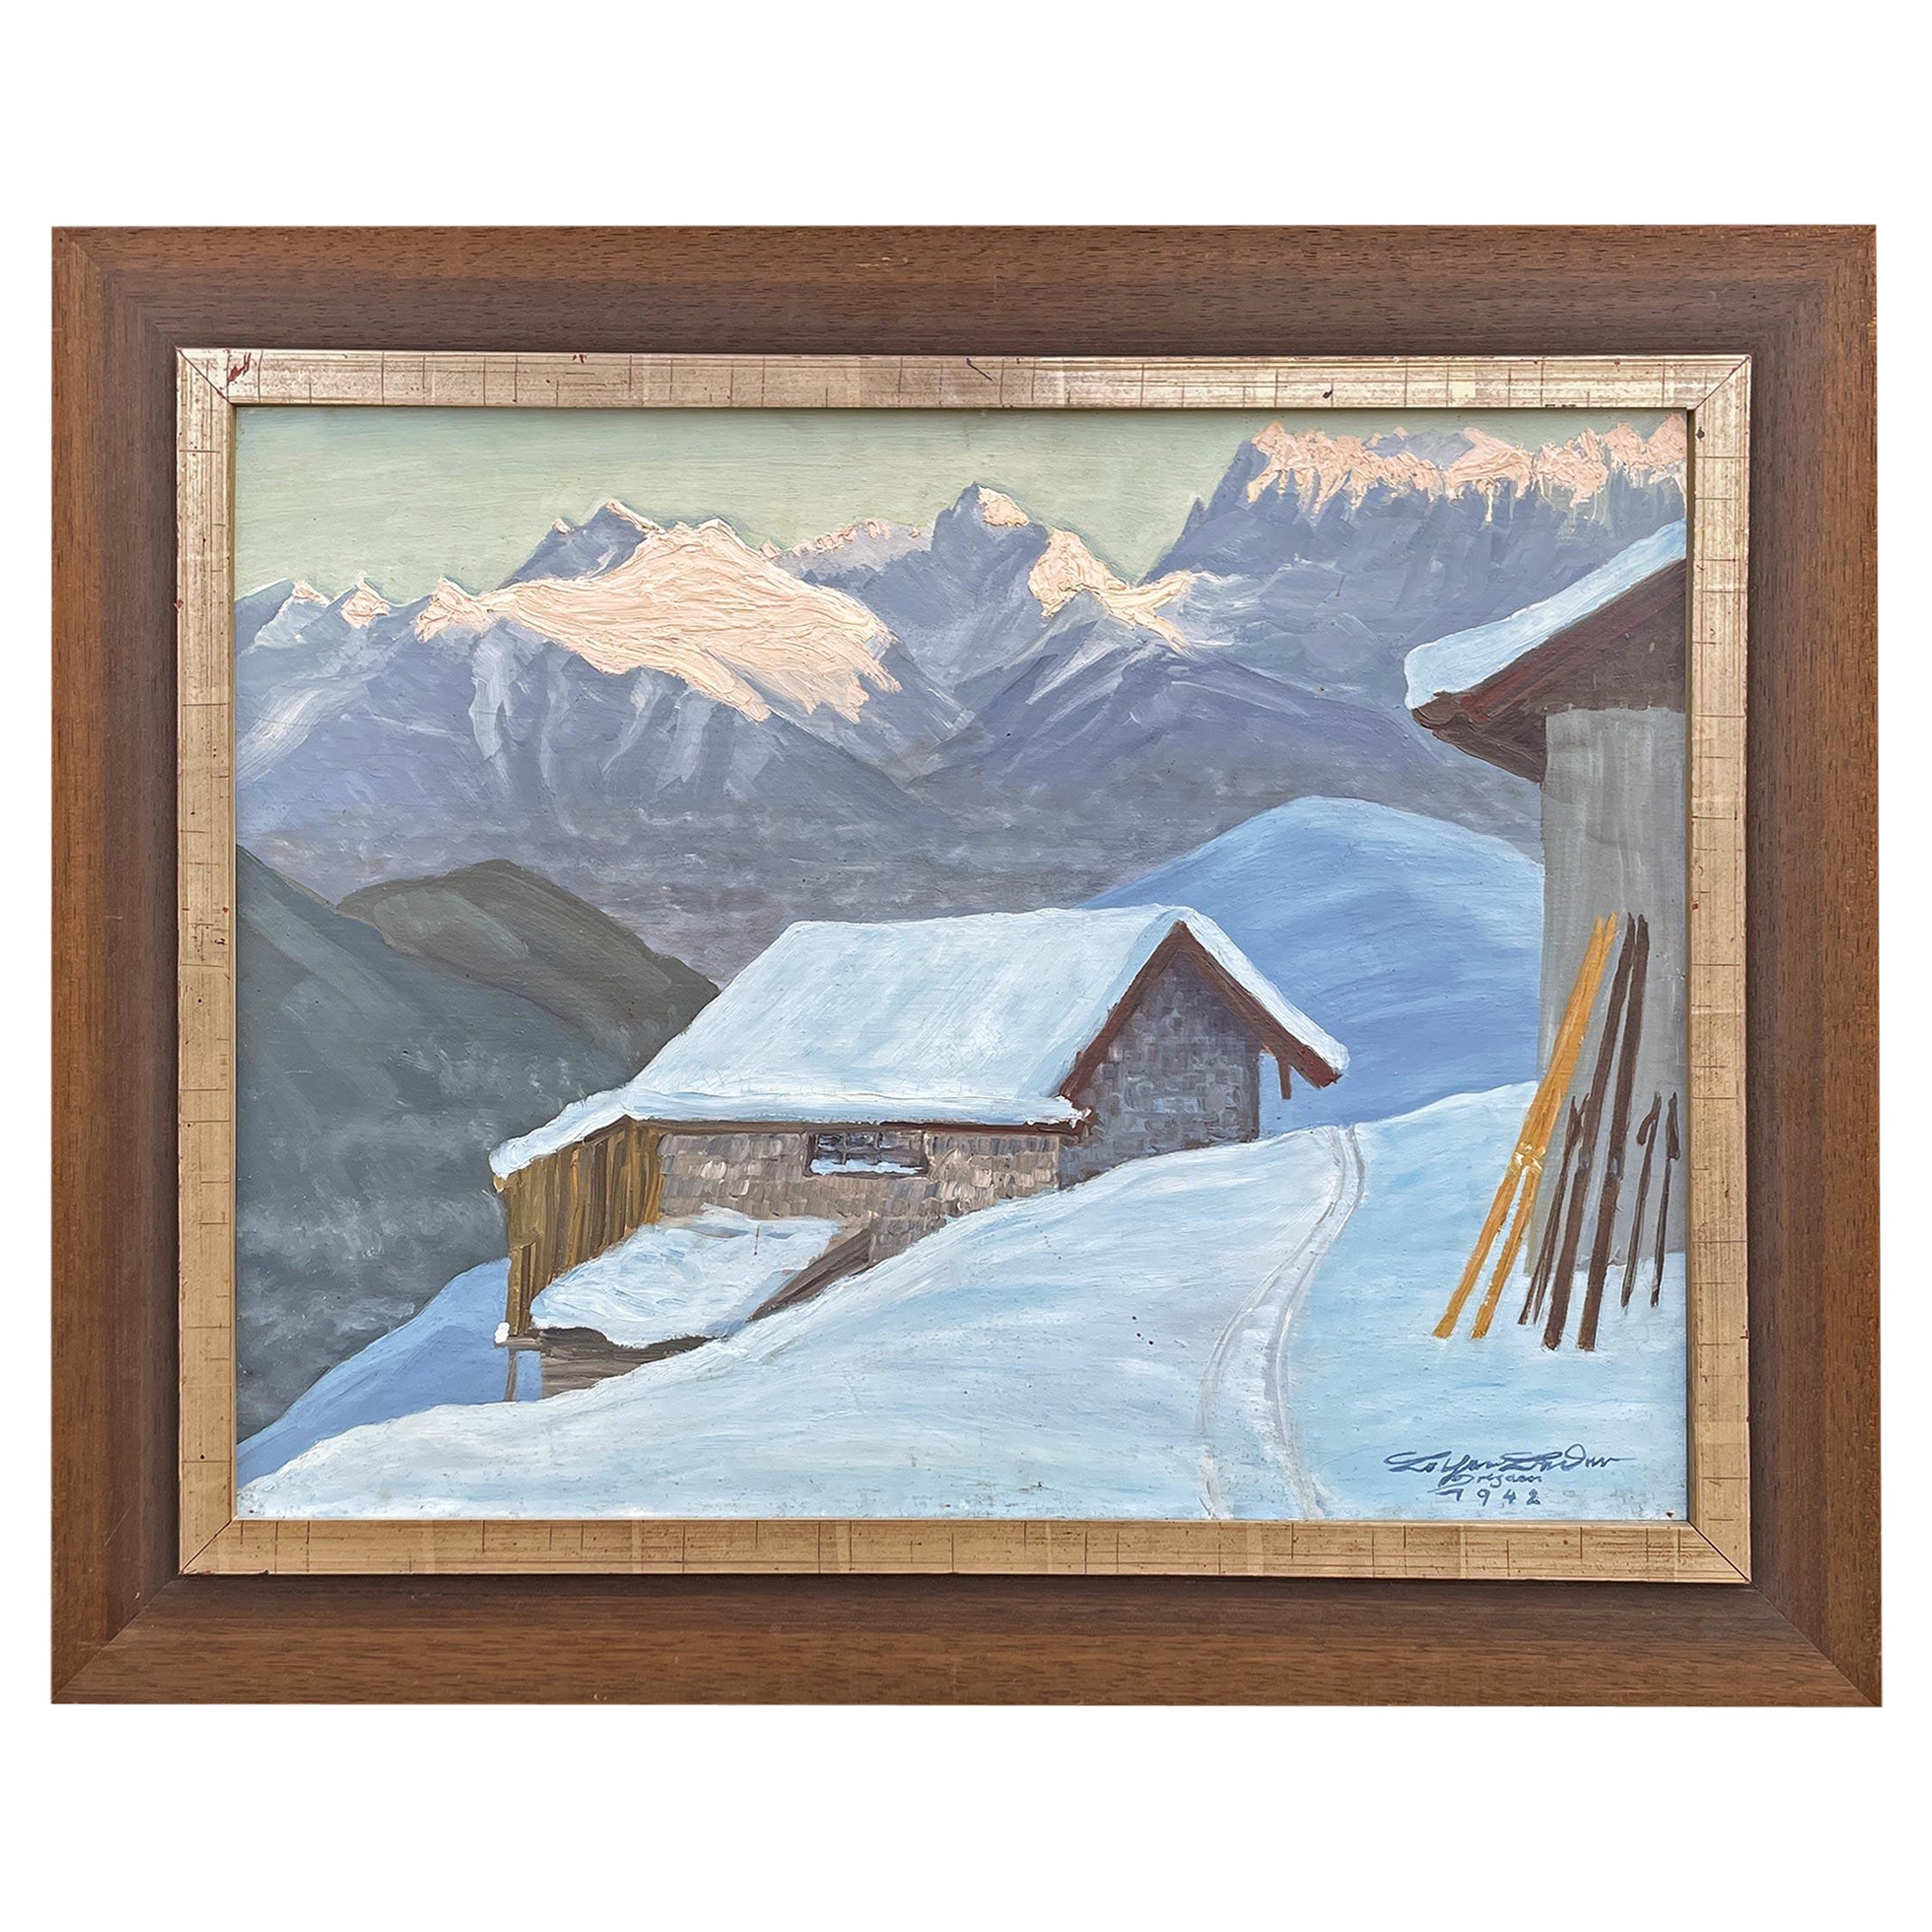 Ski Painting “Last Light” oil on canvas by Lothar Bader –  1942